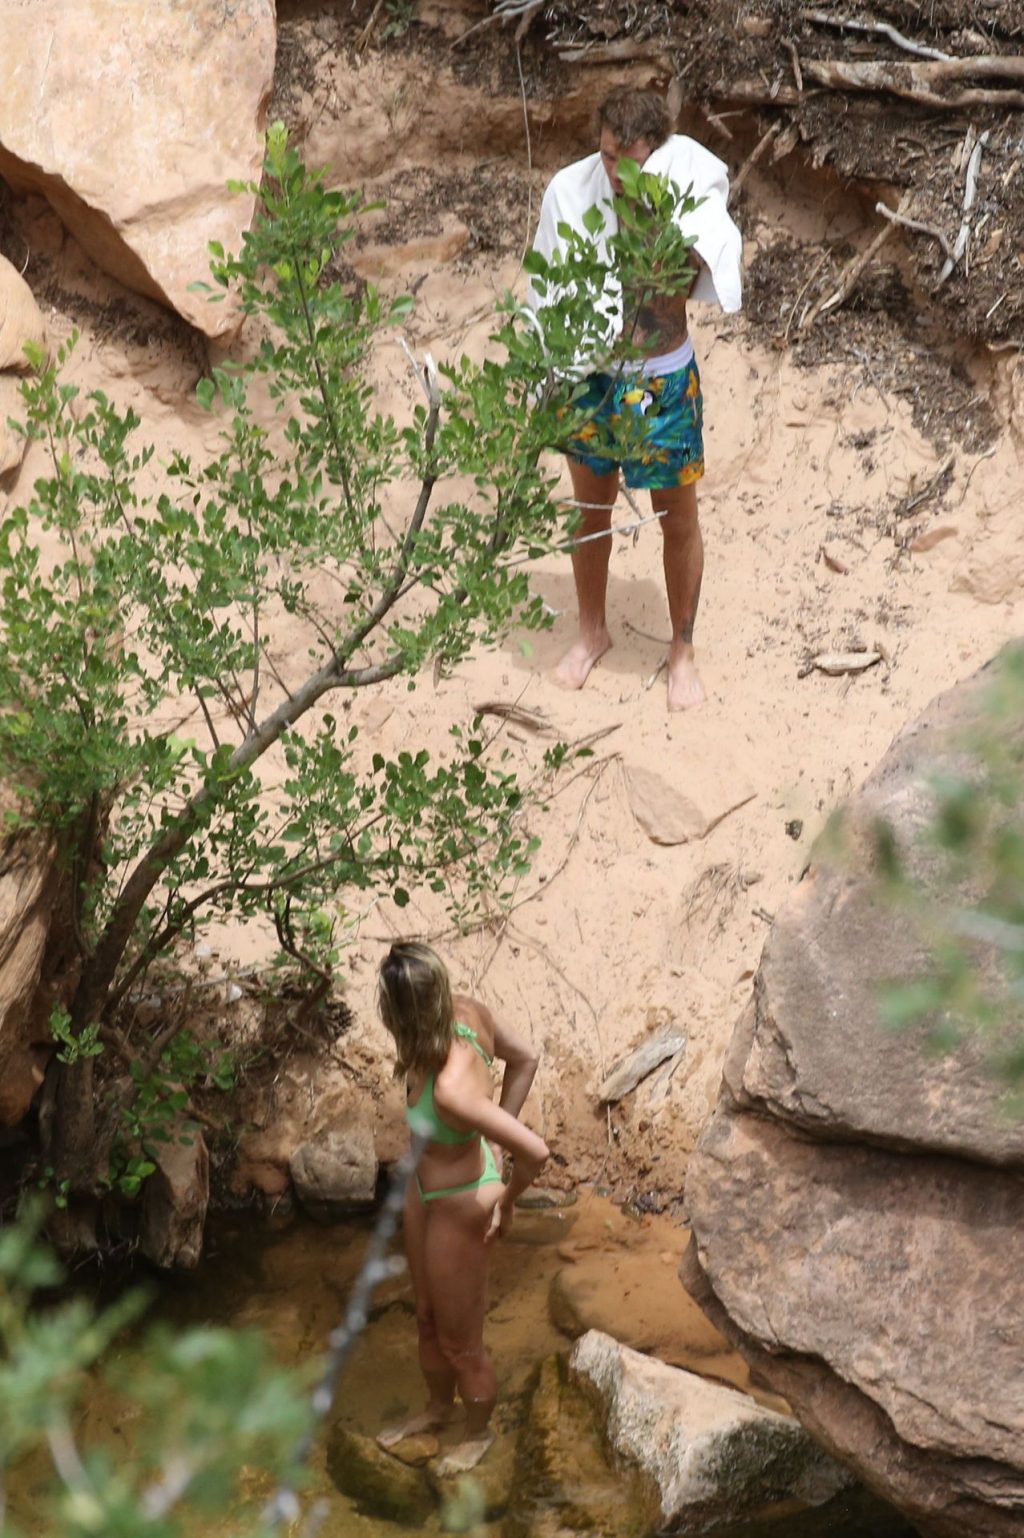 Justin Bieber &amp; Hailey Baldwin Go Swimming in a Creek (103 Photos)